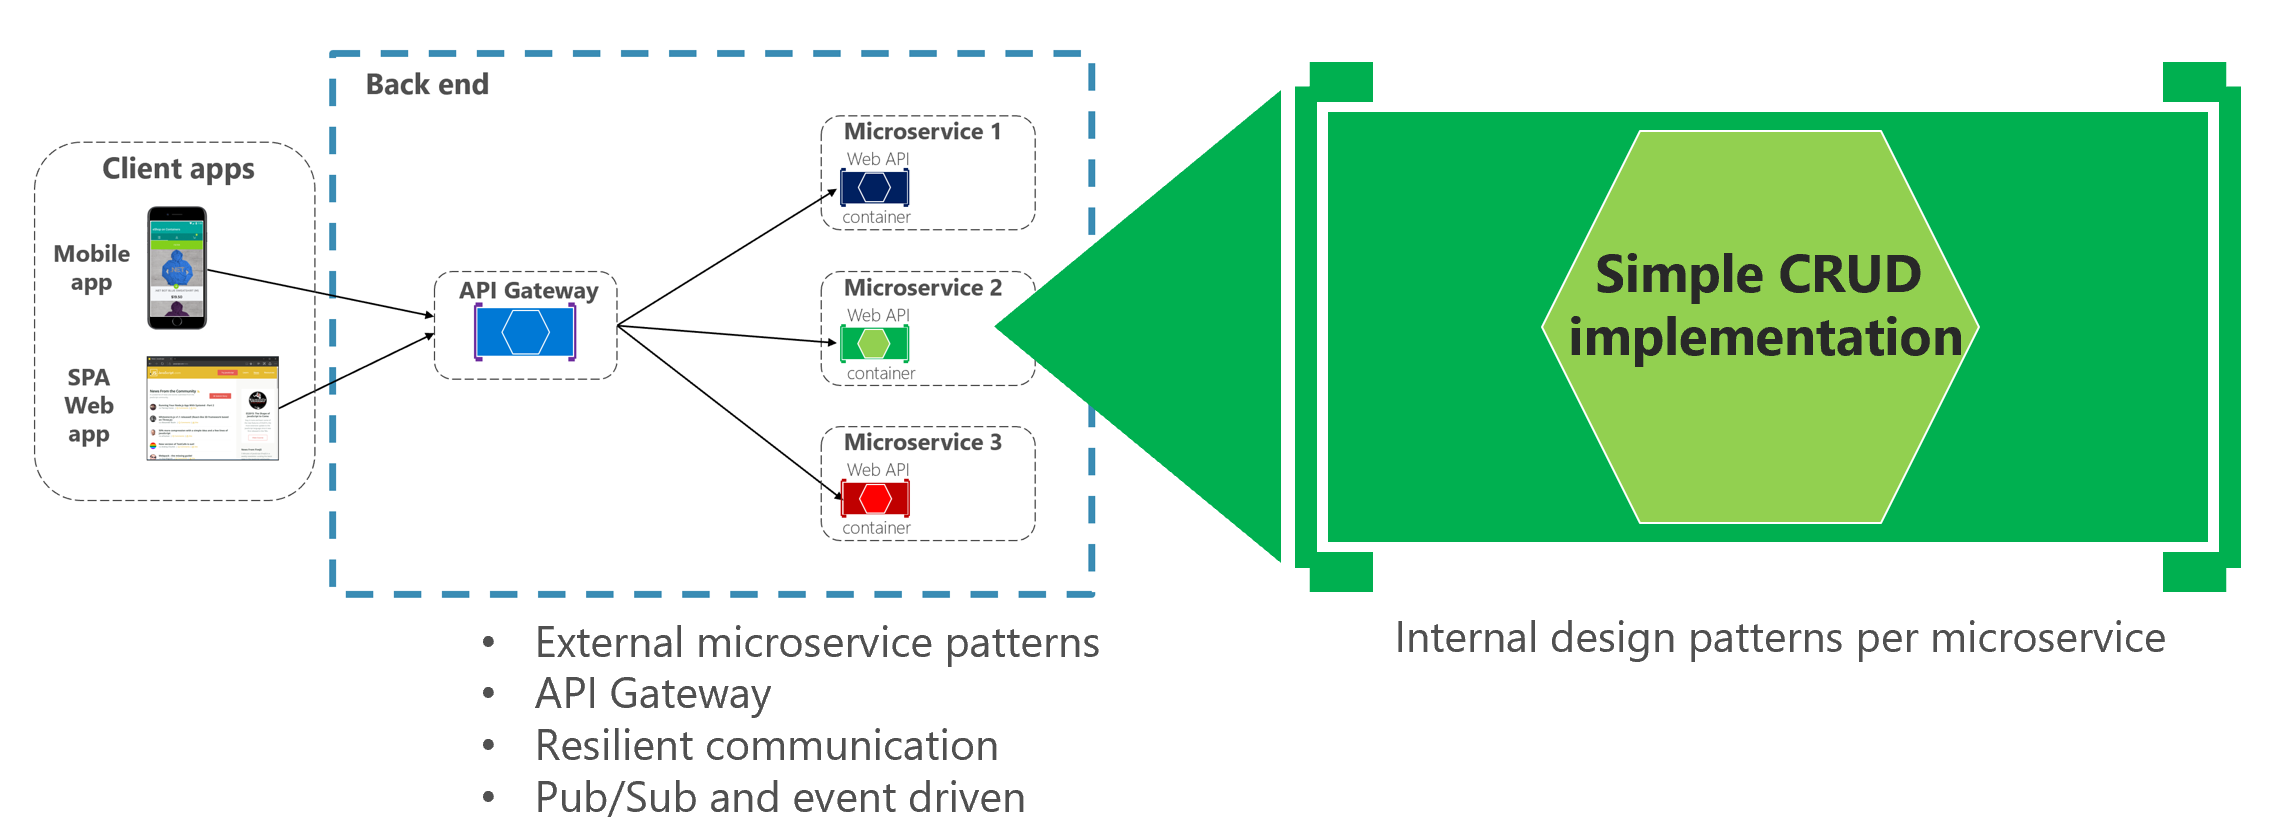 Diagram showing a simple CRUD microservice internal design pattern.